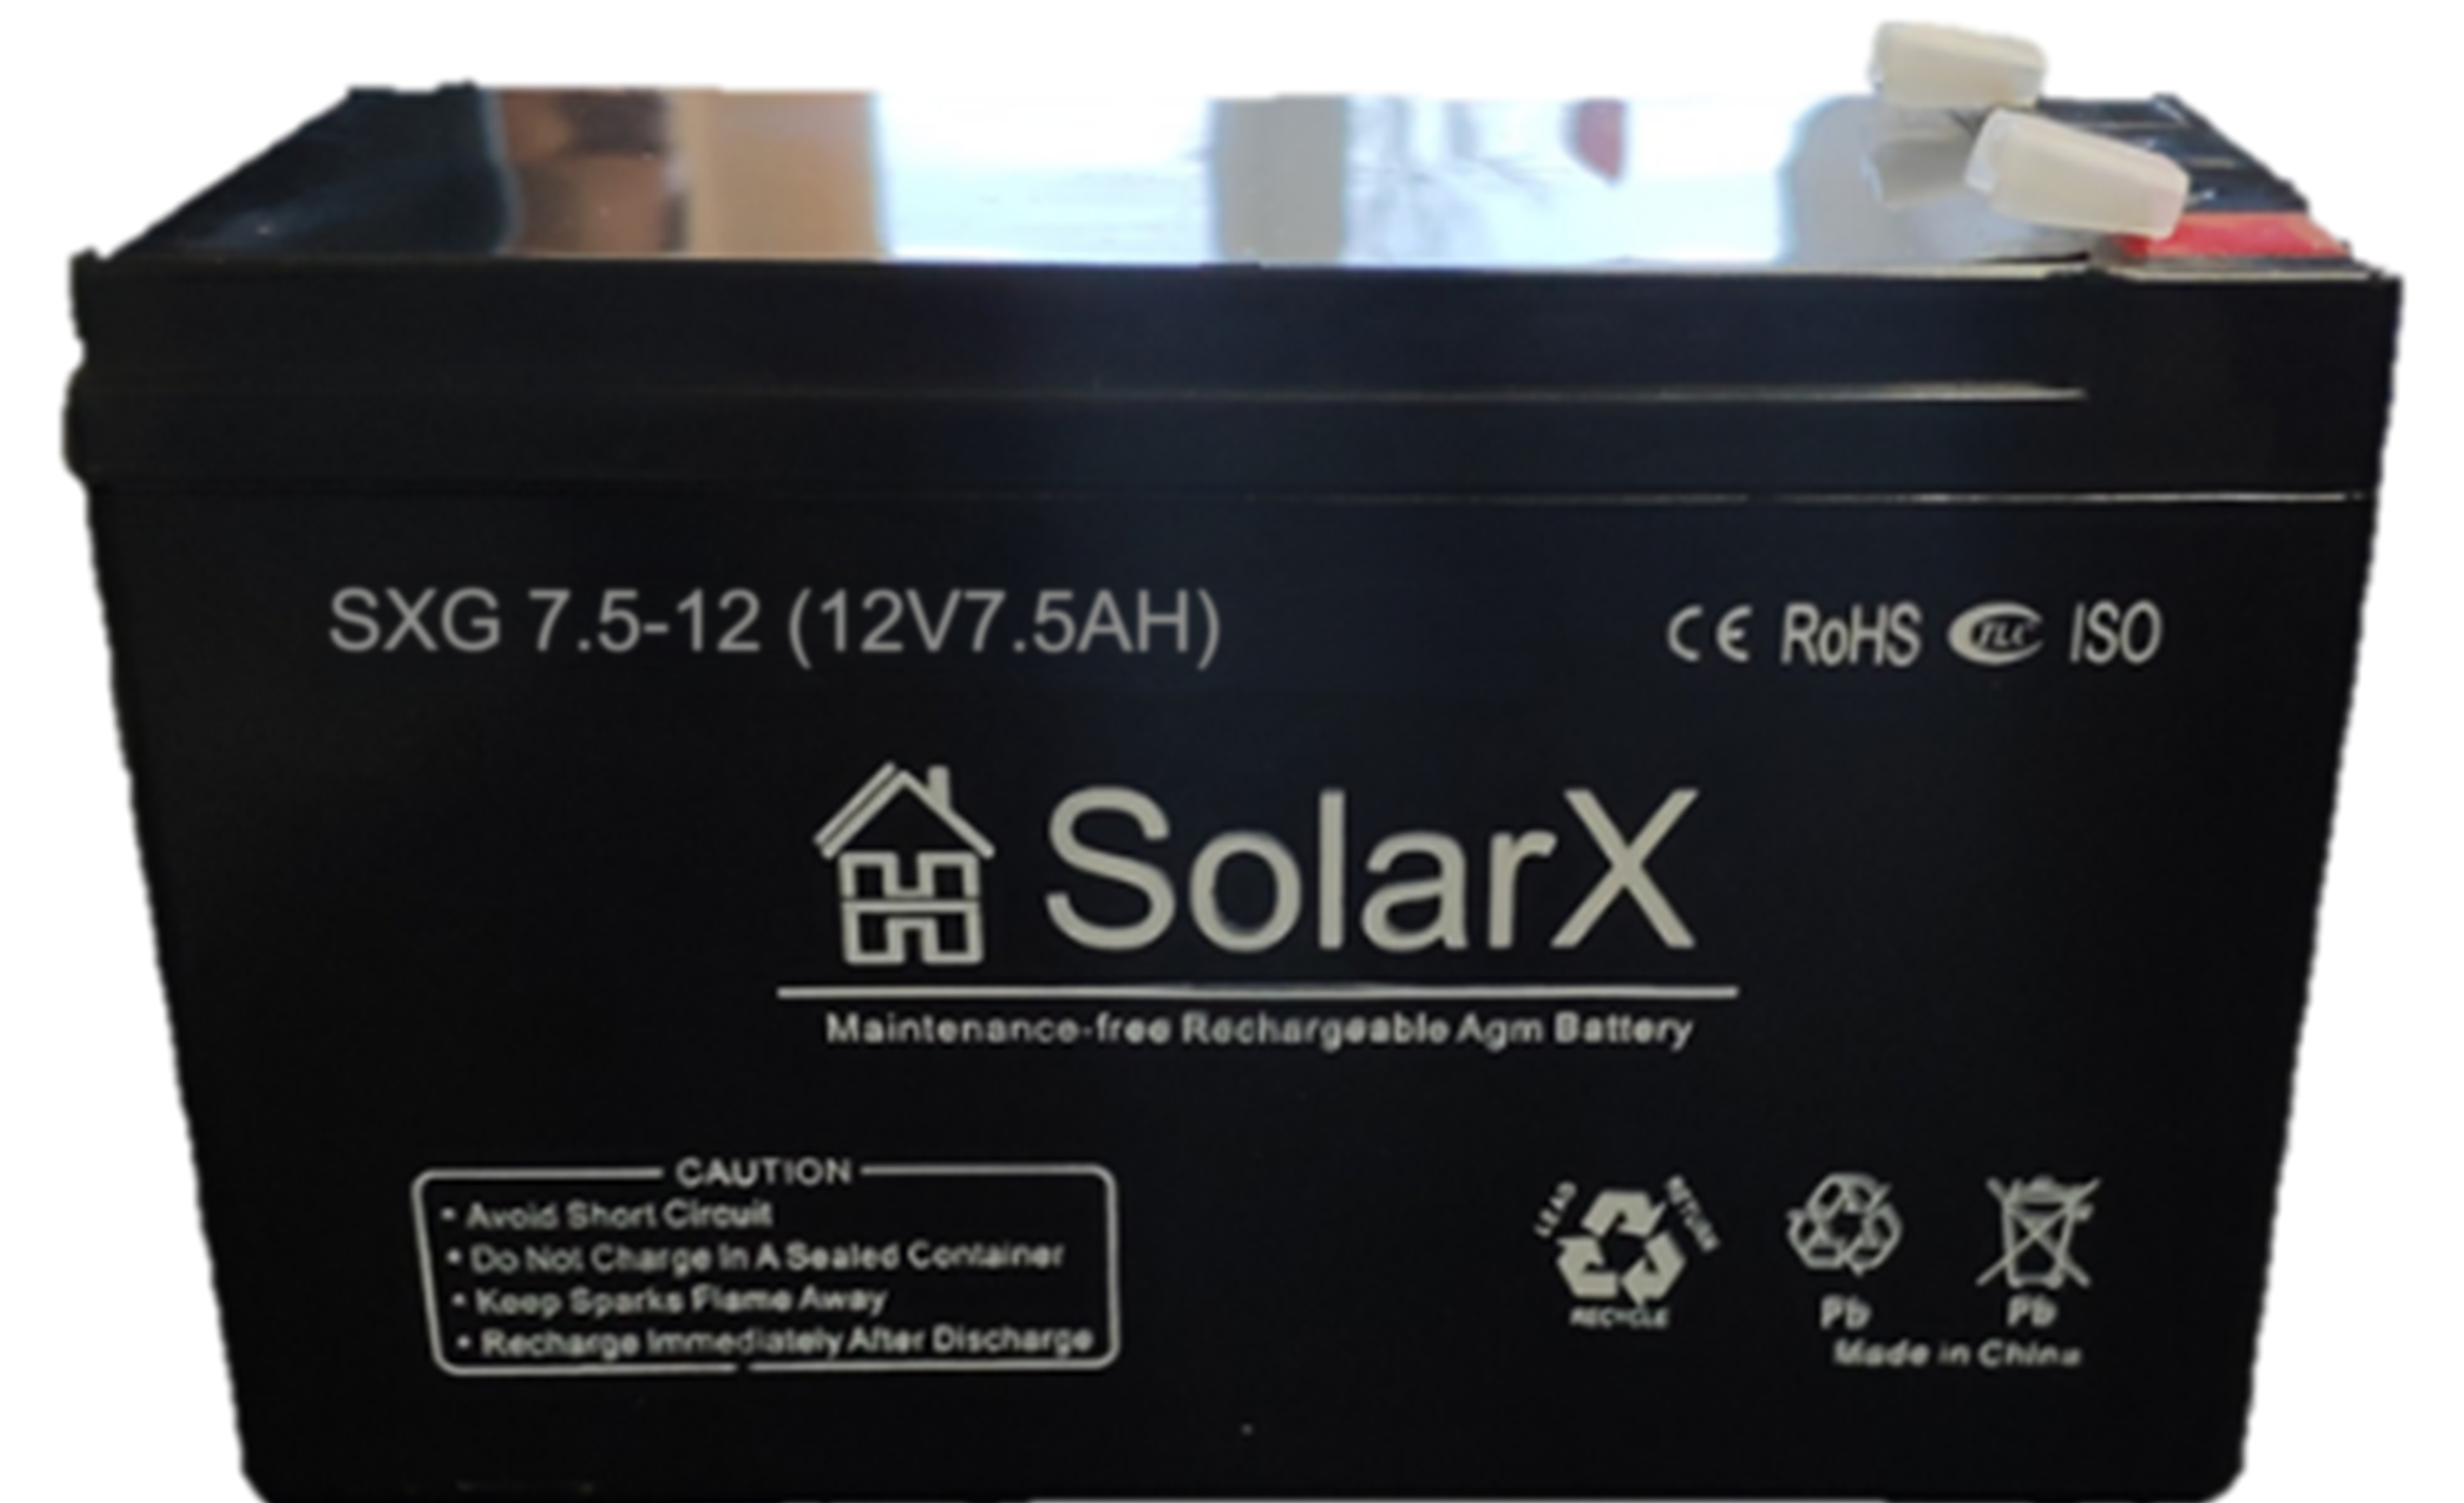 Solarx sxg 7.5 12